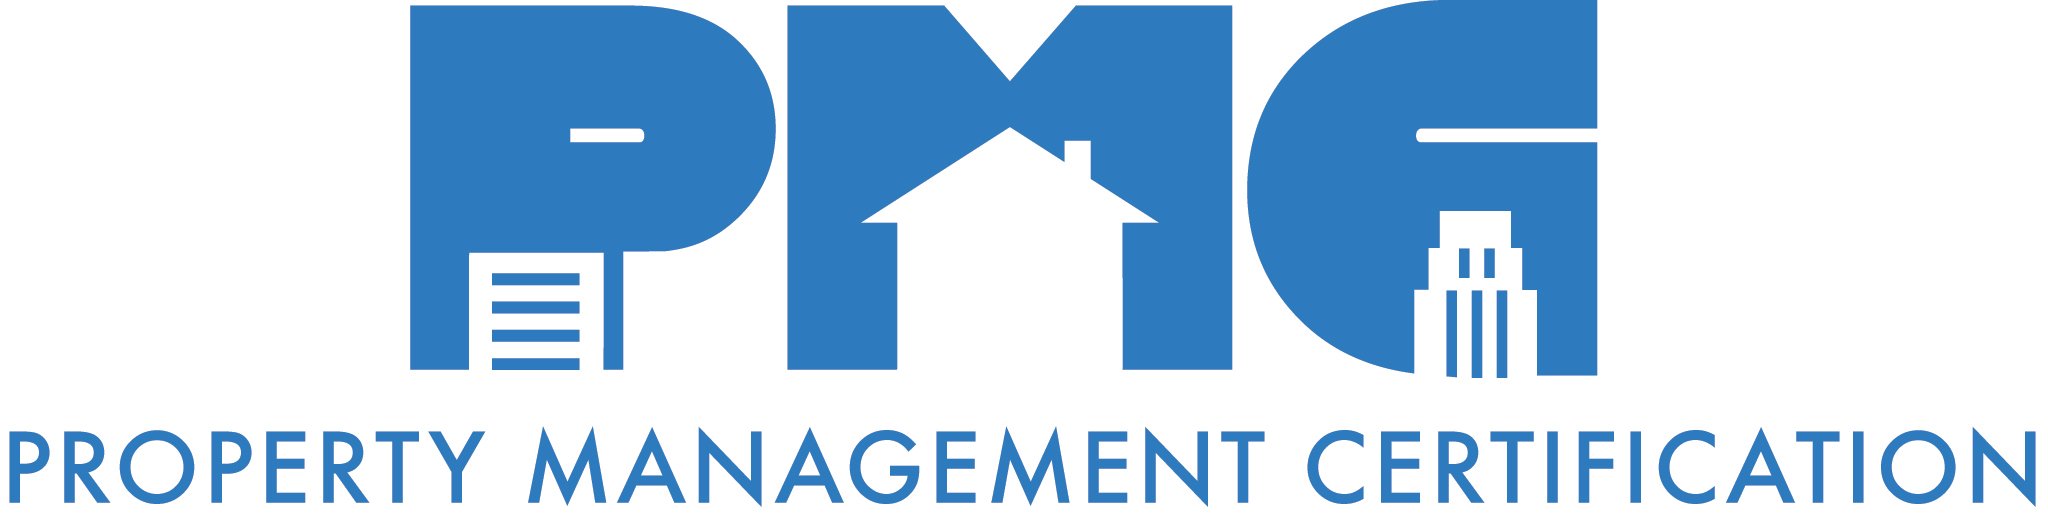 Property Management Certification logo